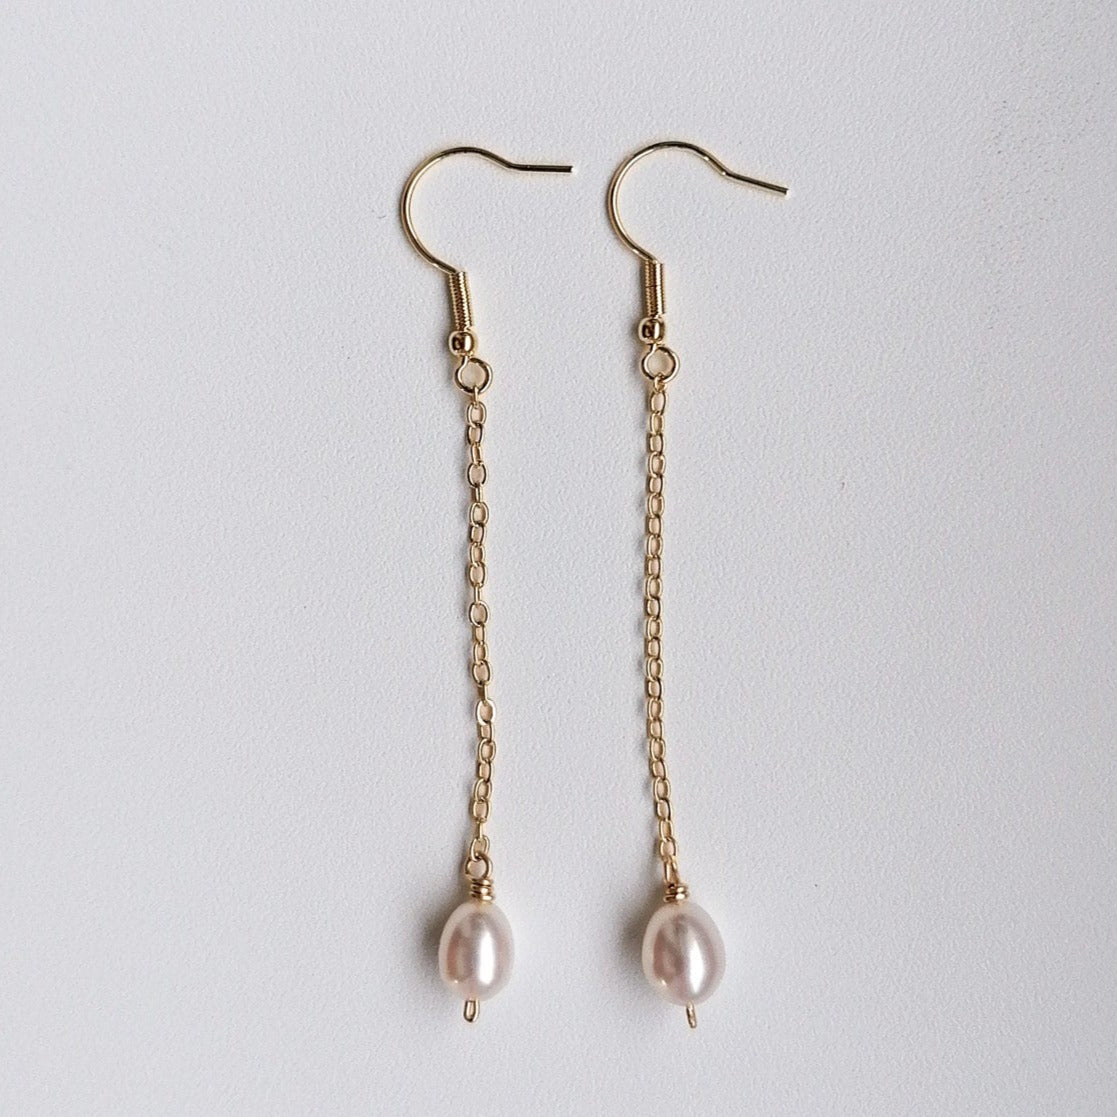 Verona earrings - gold filled